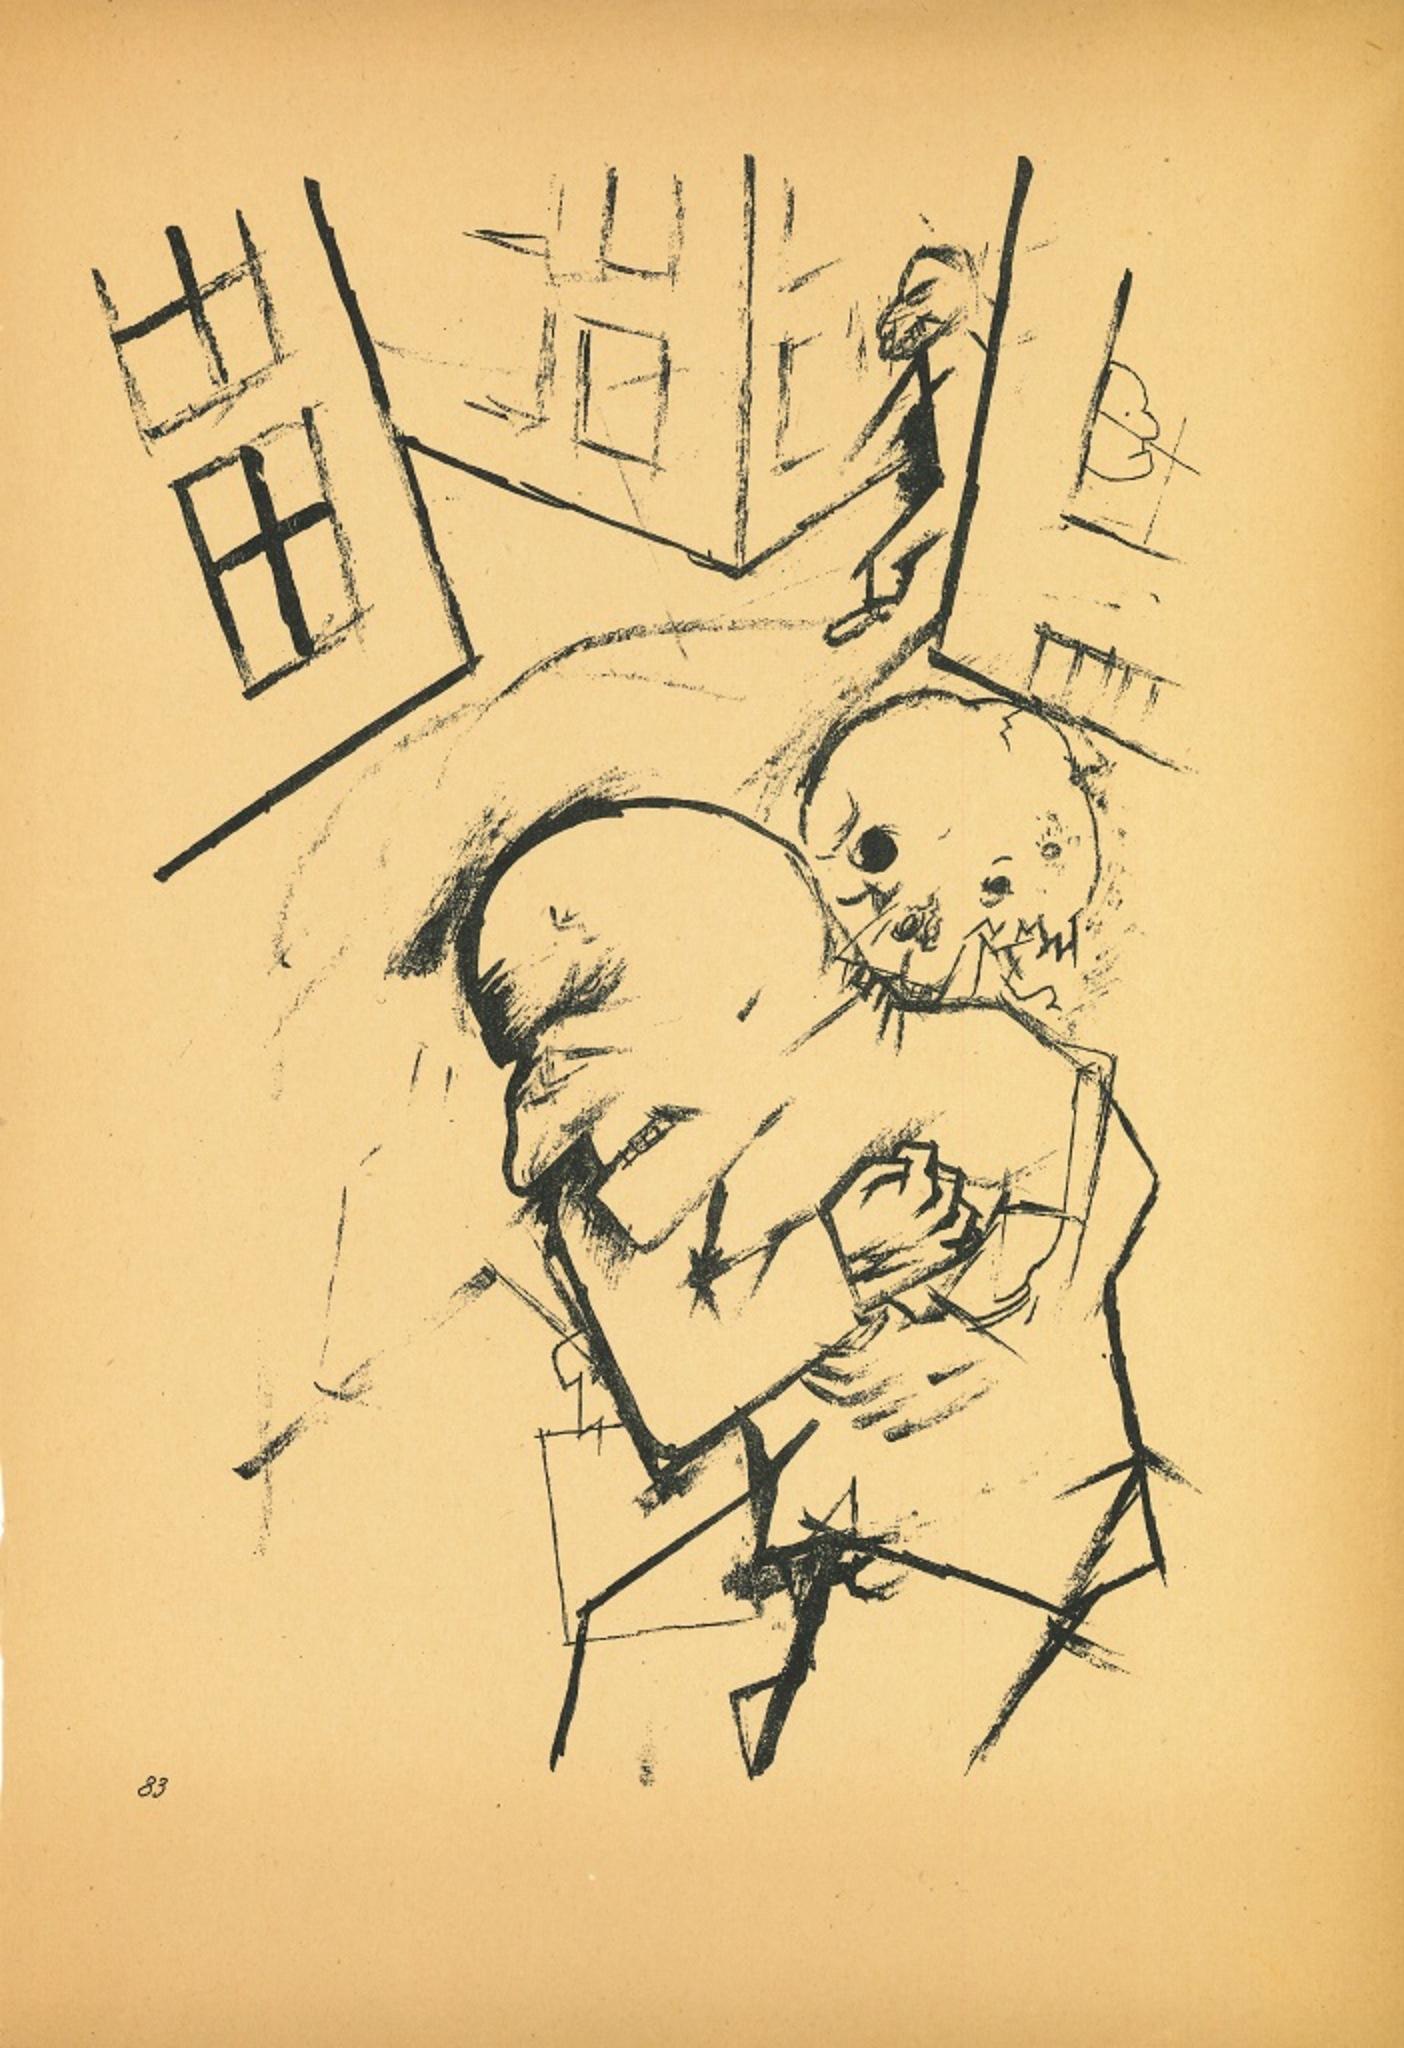 The Hug - Original Lithograph by George Grosz - 1923